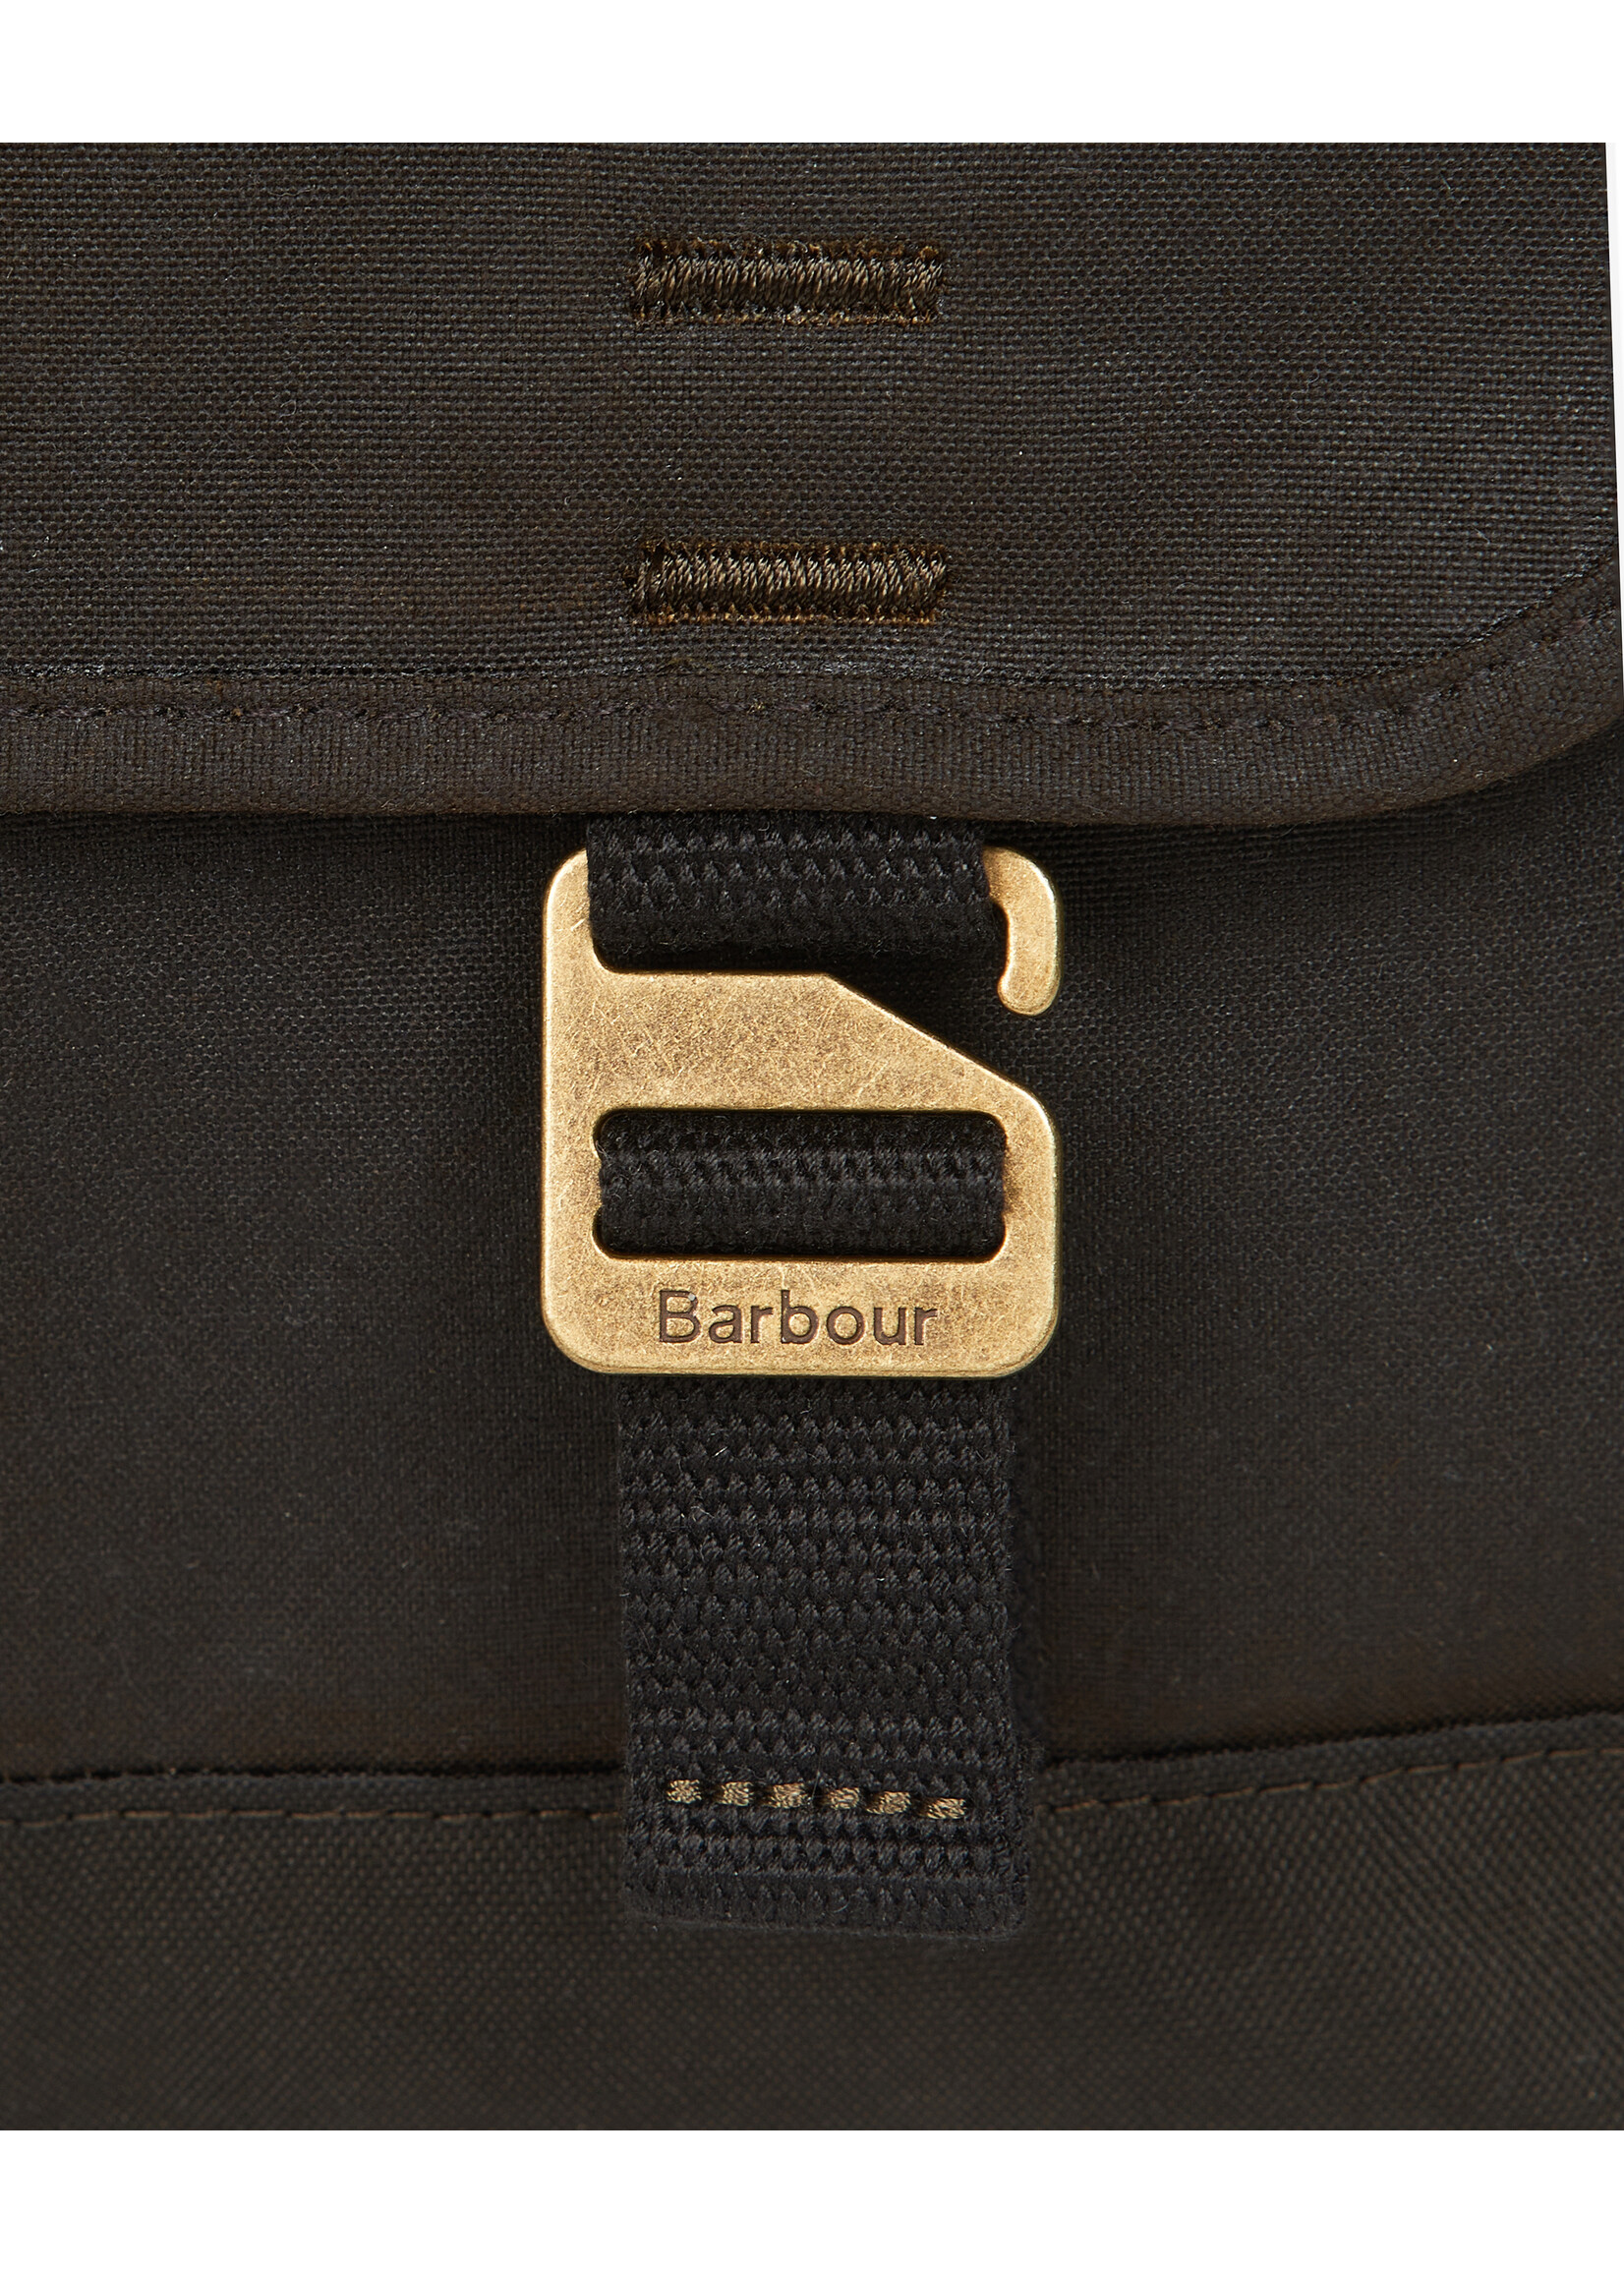 Barbour ESSENTIAL WAX MESSENGER BAG